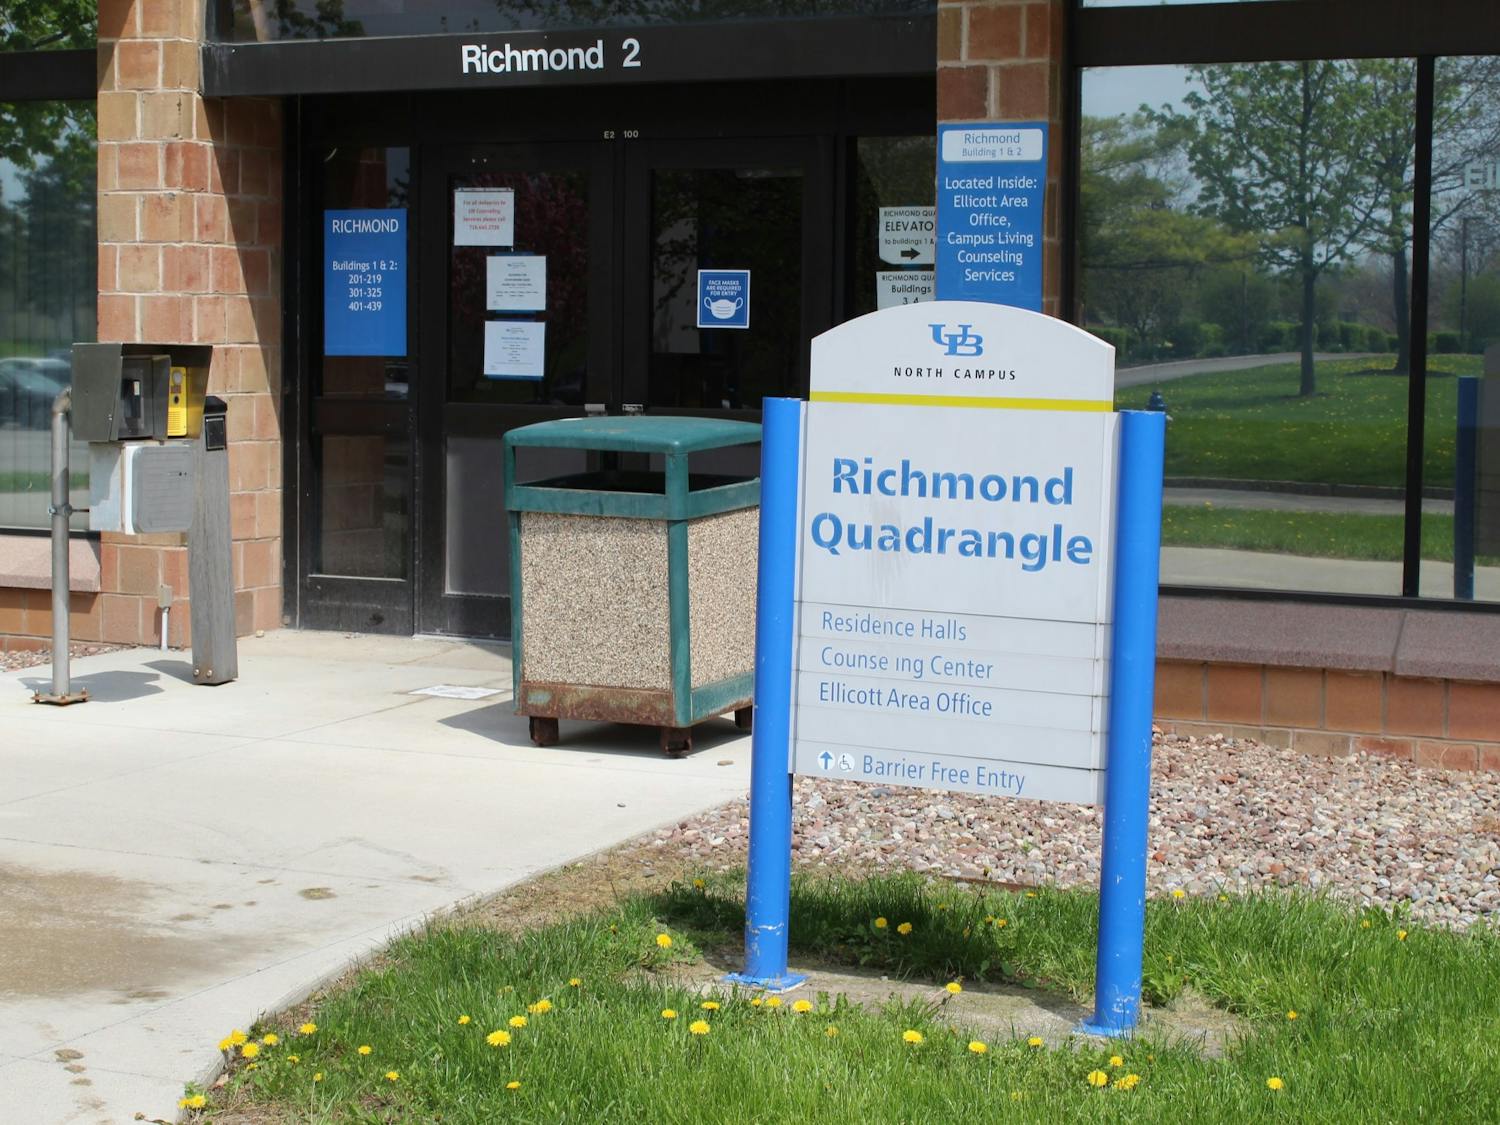 Richmond Quadrangle houses UB’s Counseling Services.